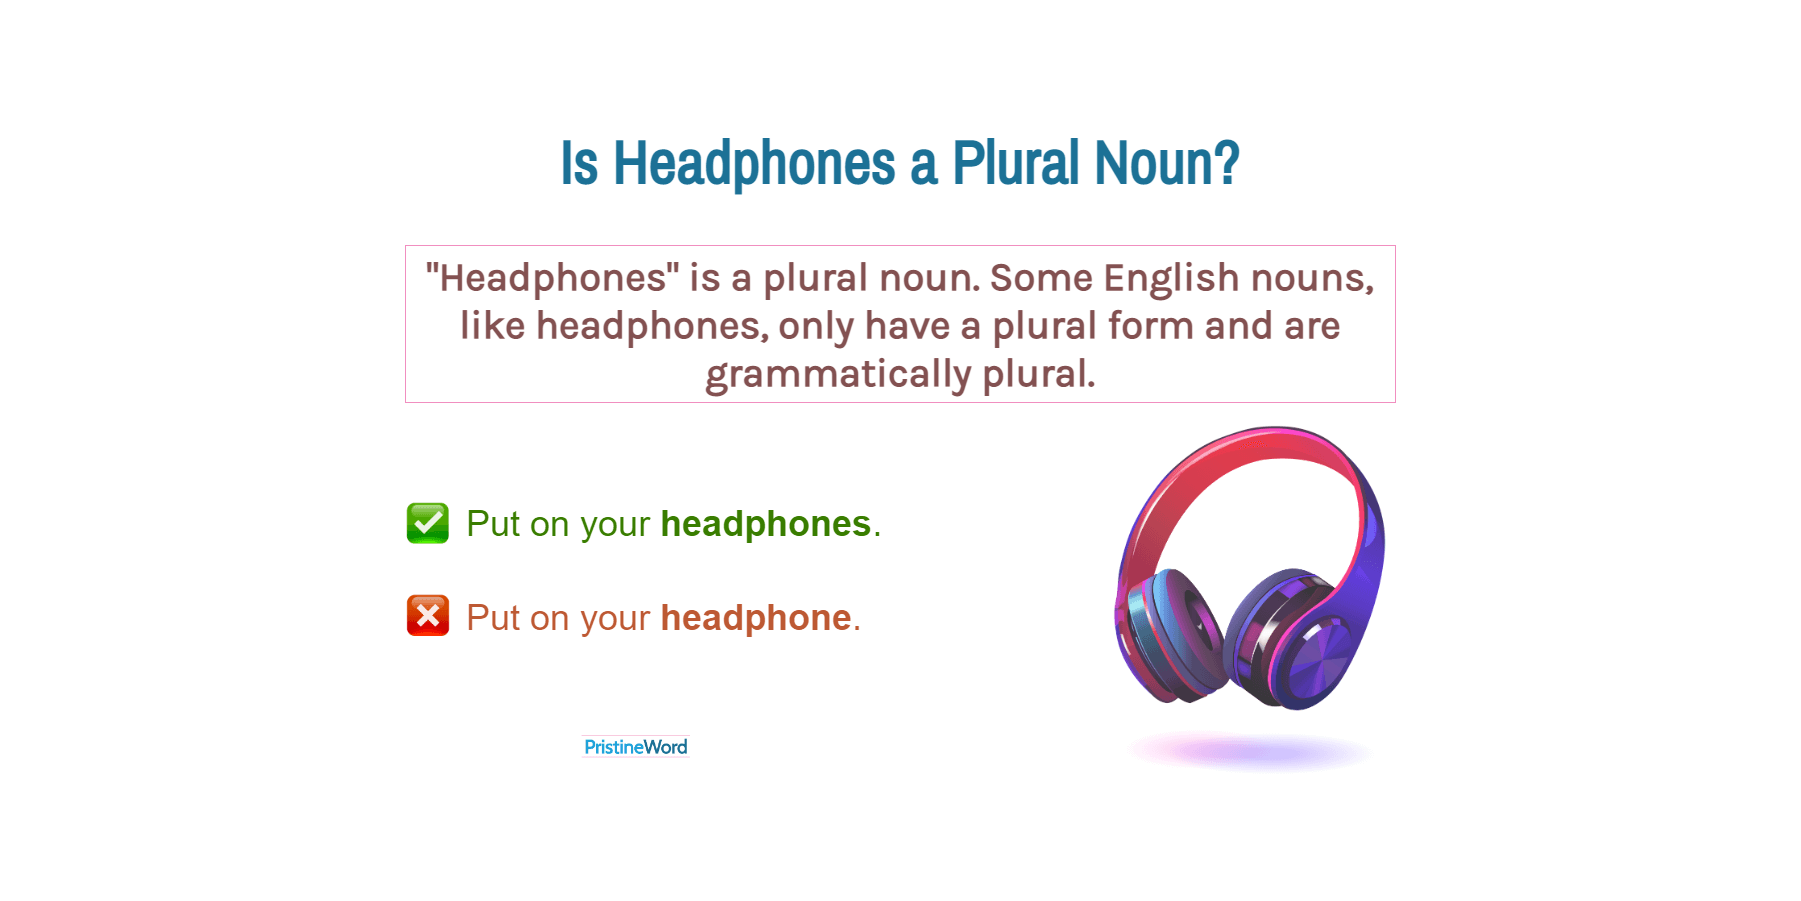 Is Headphones a Plural Noun?